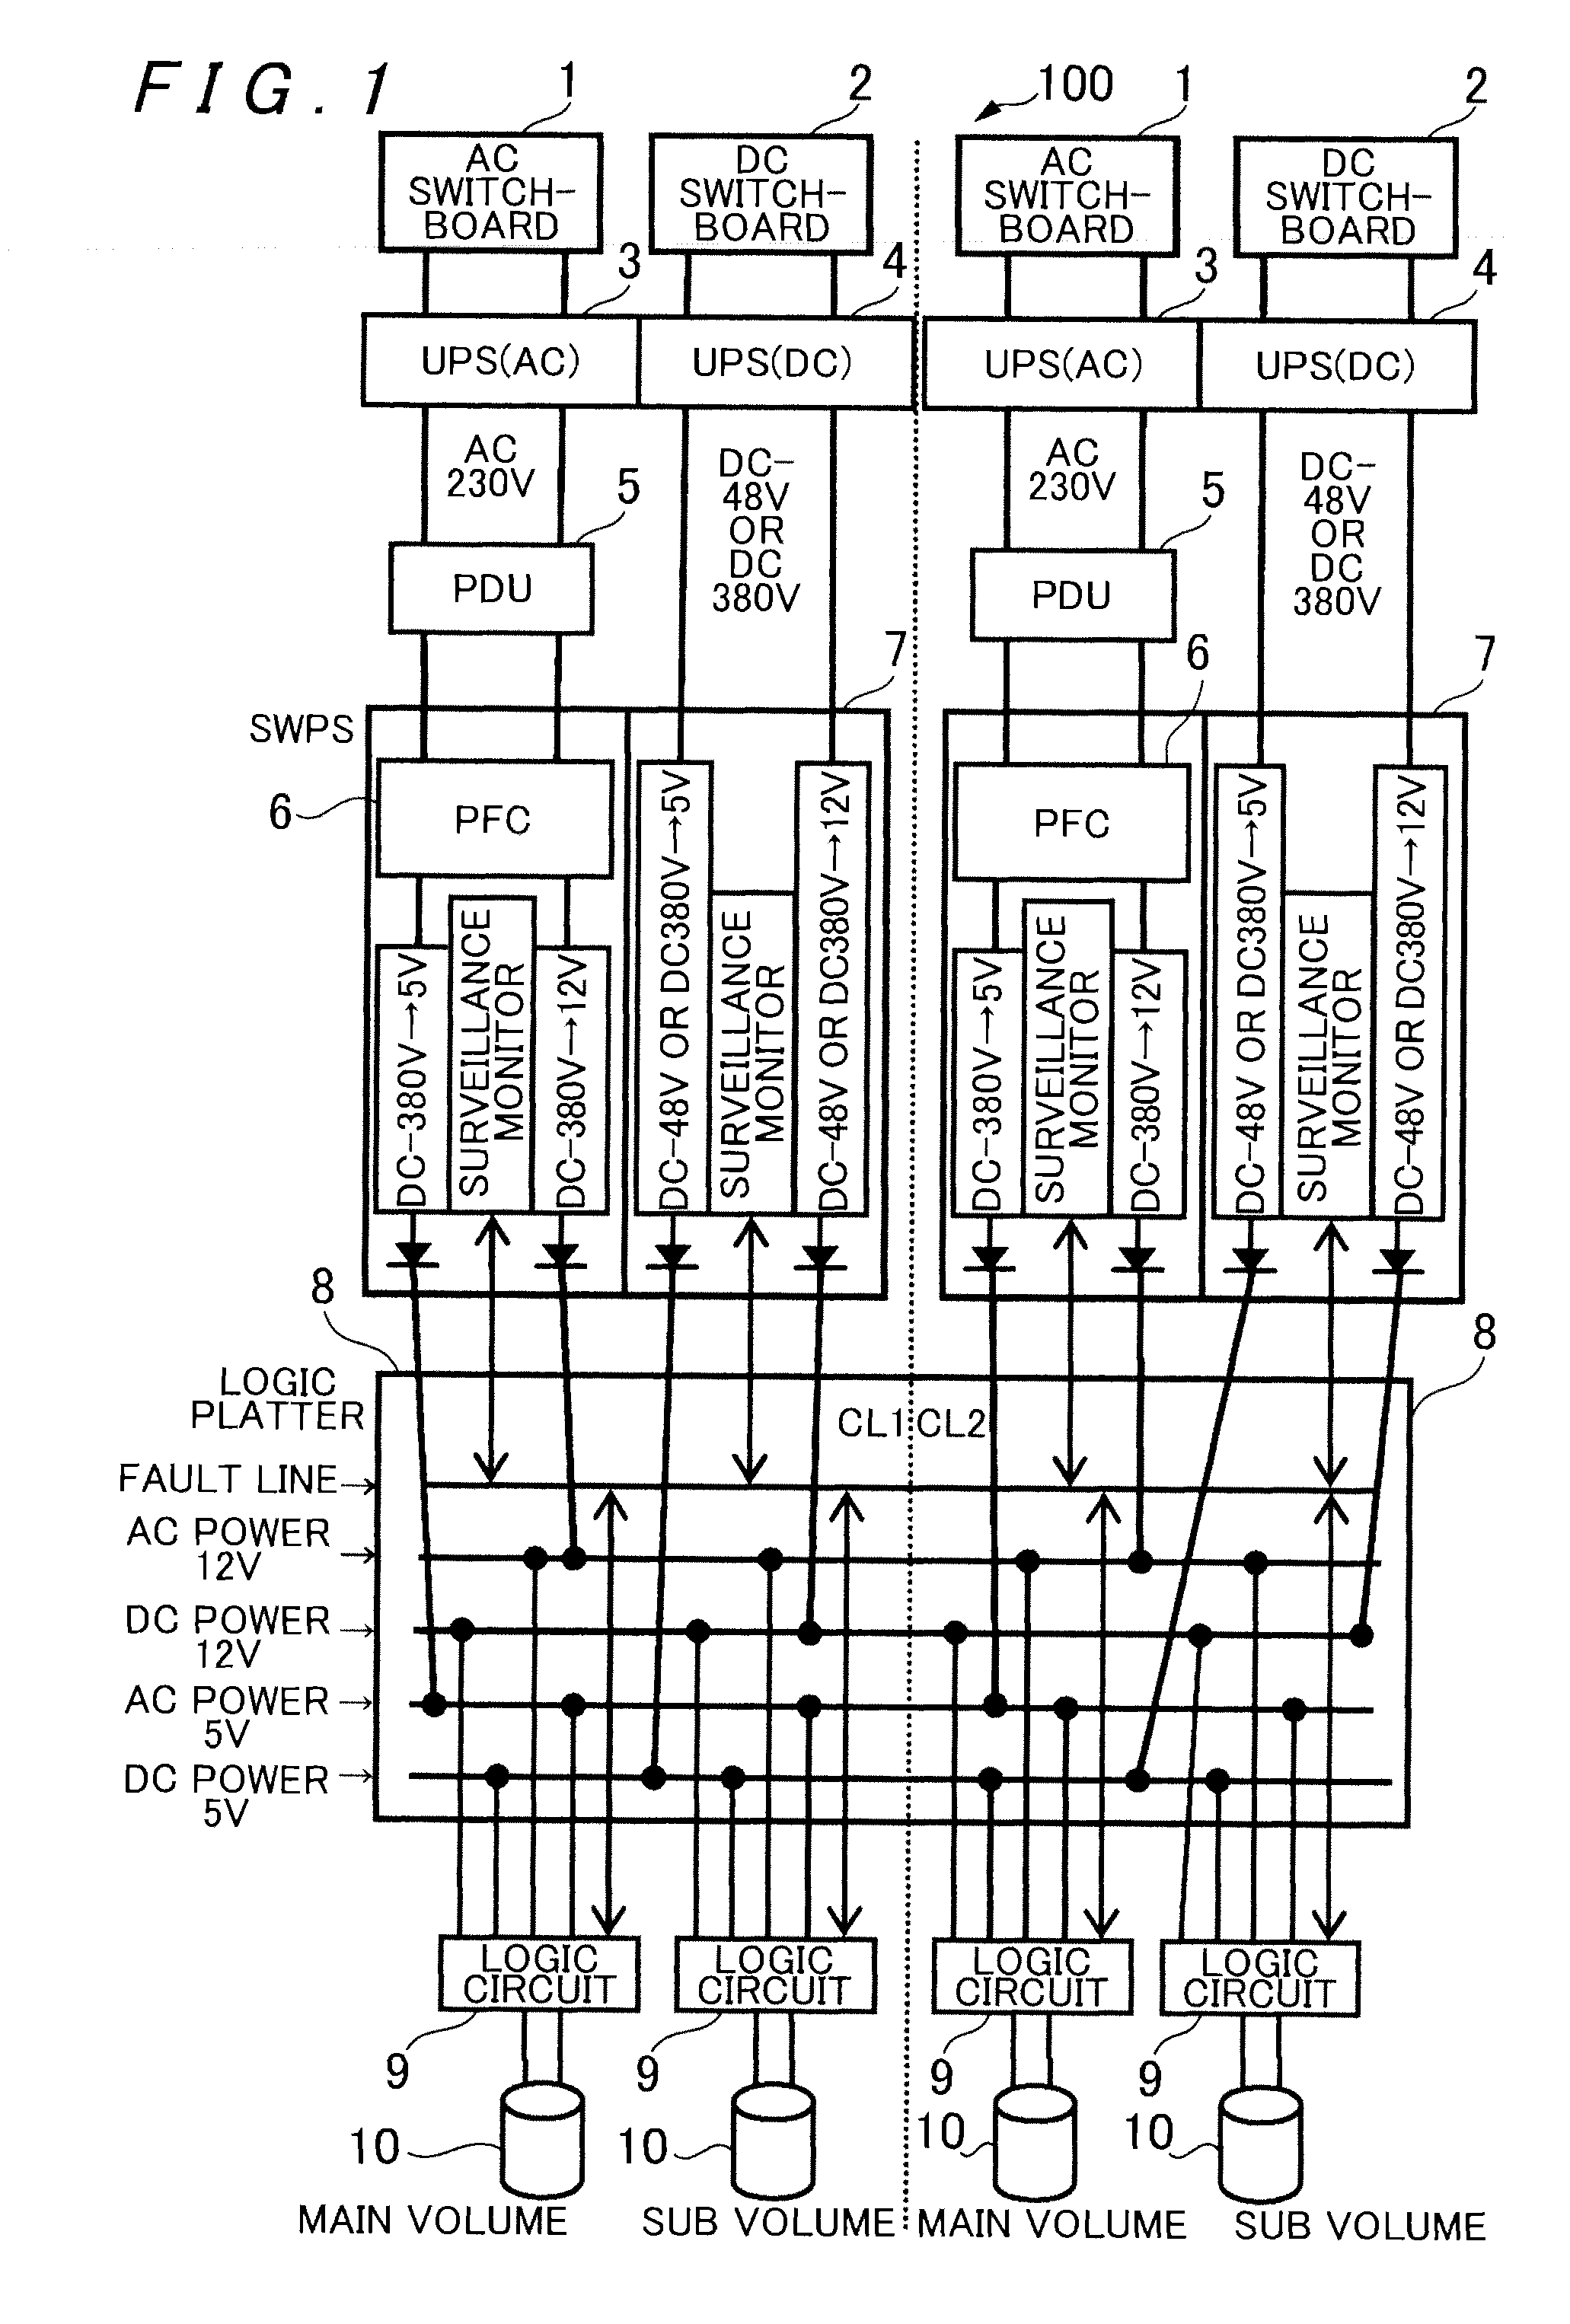 Storage apparatus and power supply method